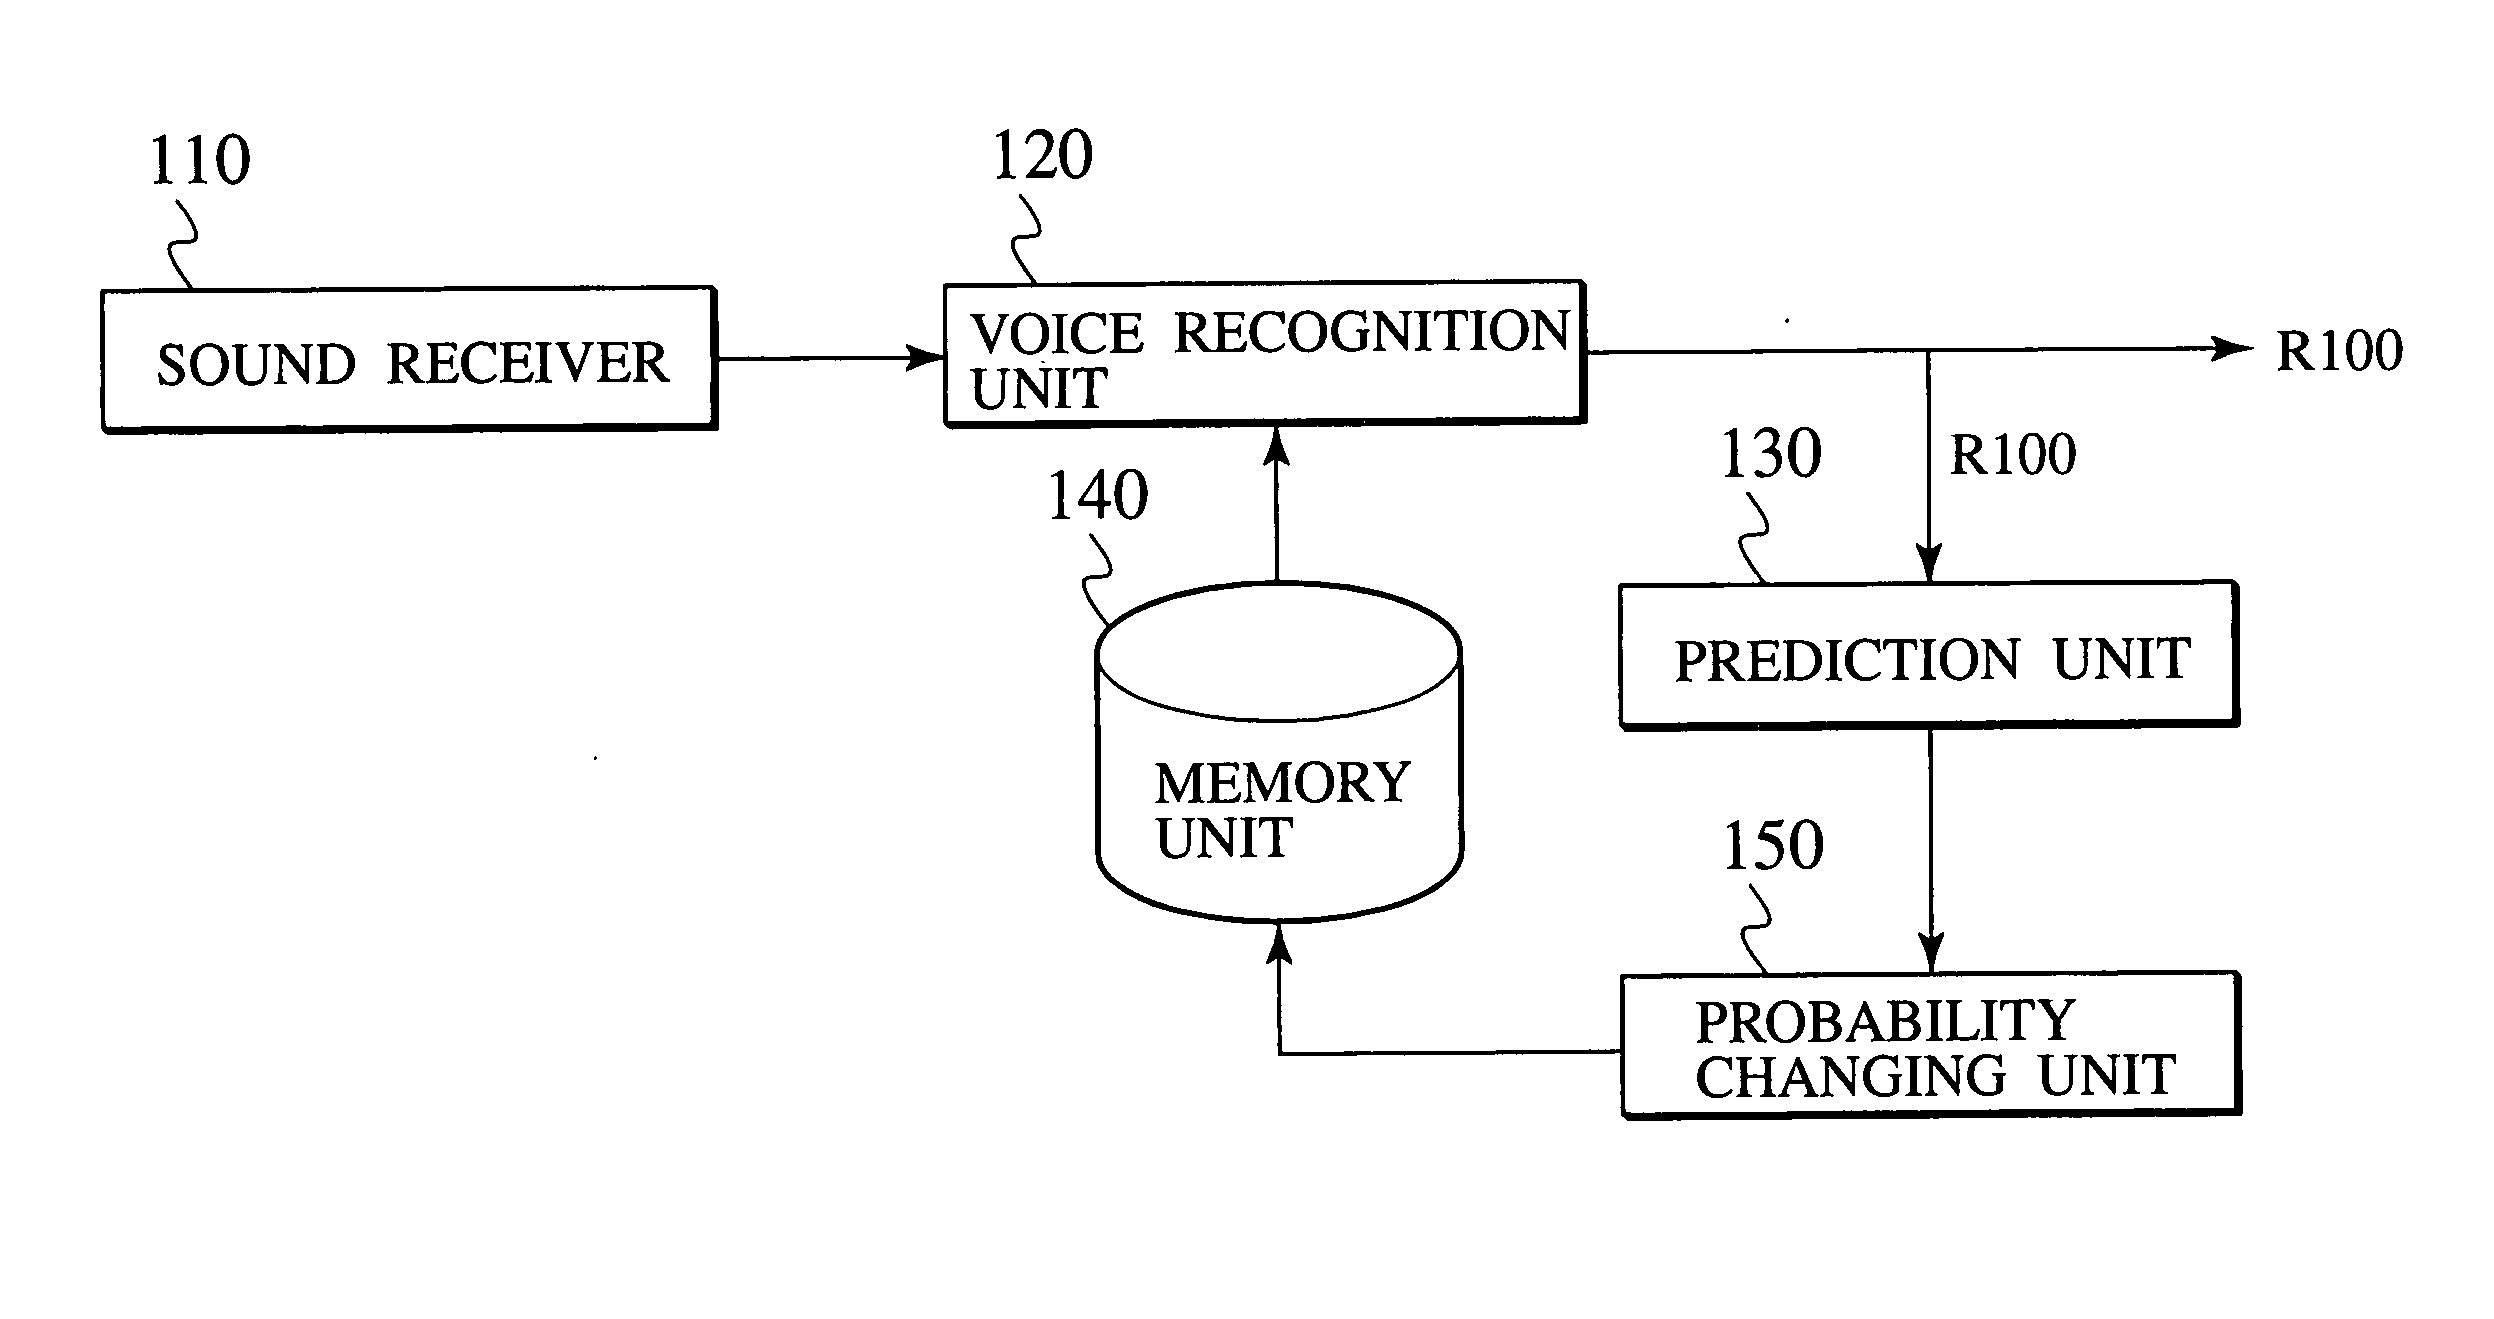 Voice recognition system for mobile unit